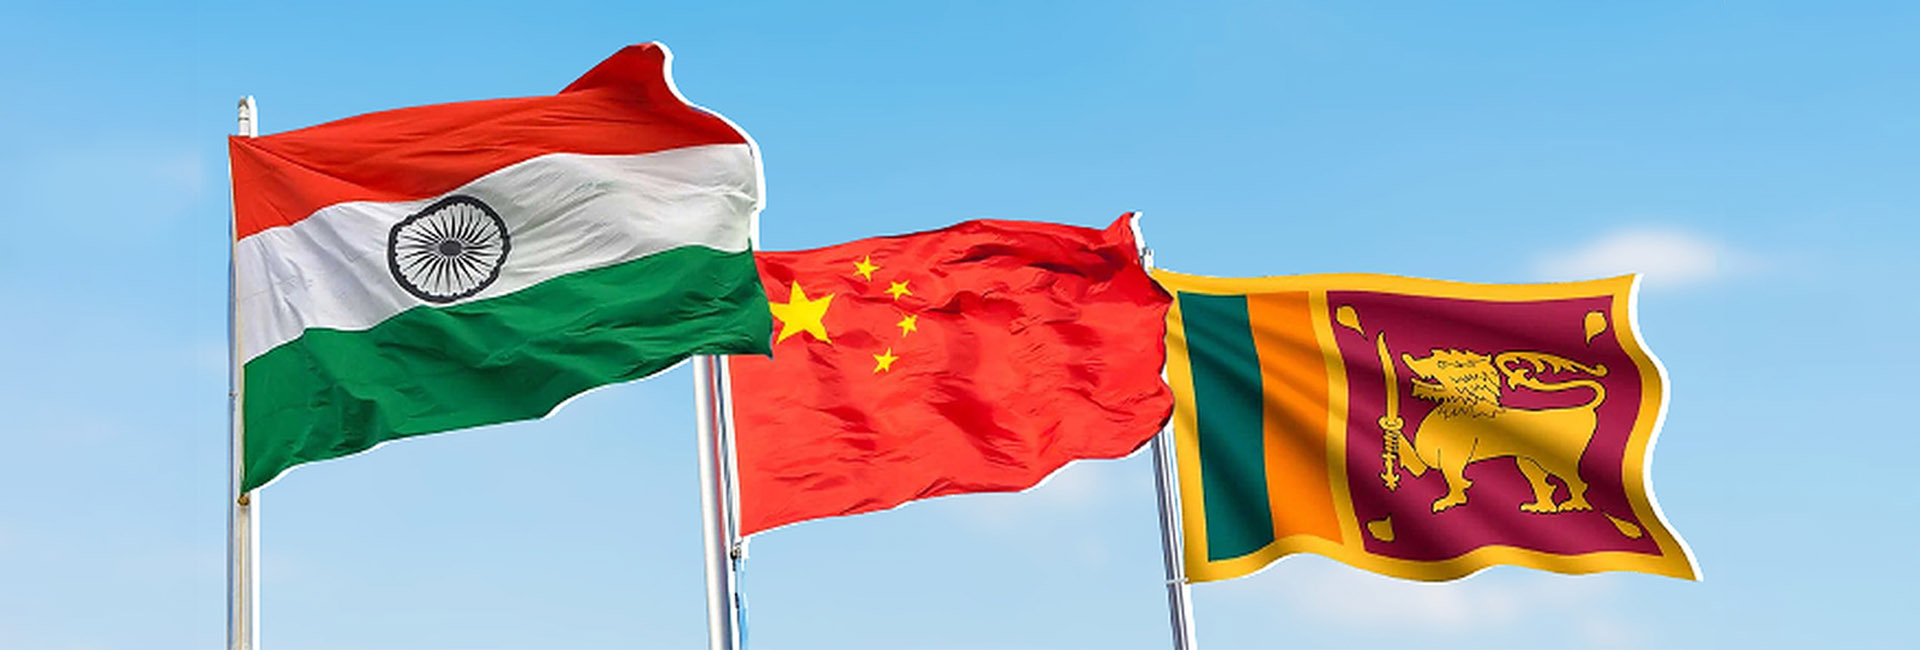 India makes inroads into Sri Lanka under China's long shadow